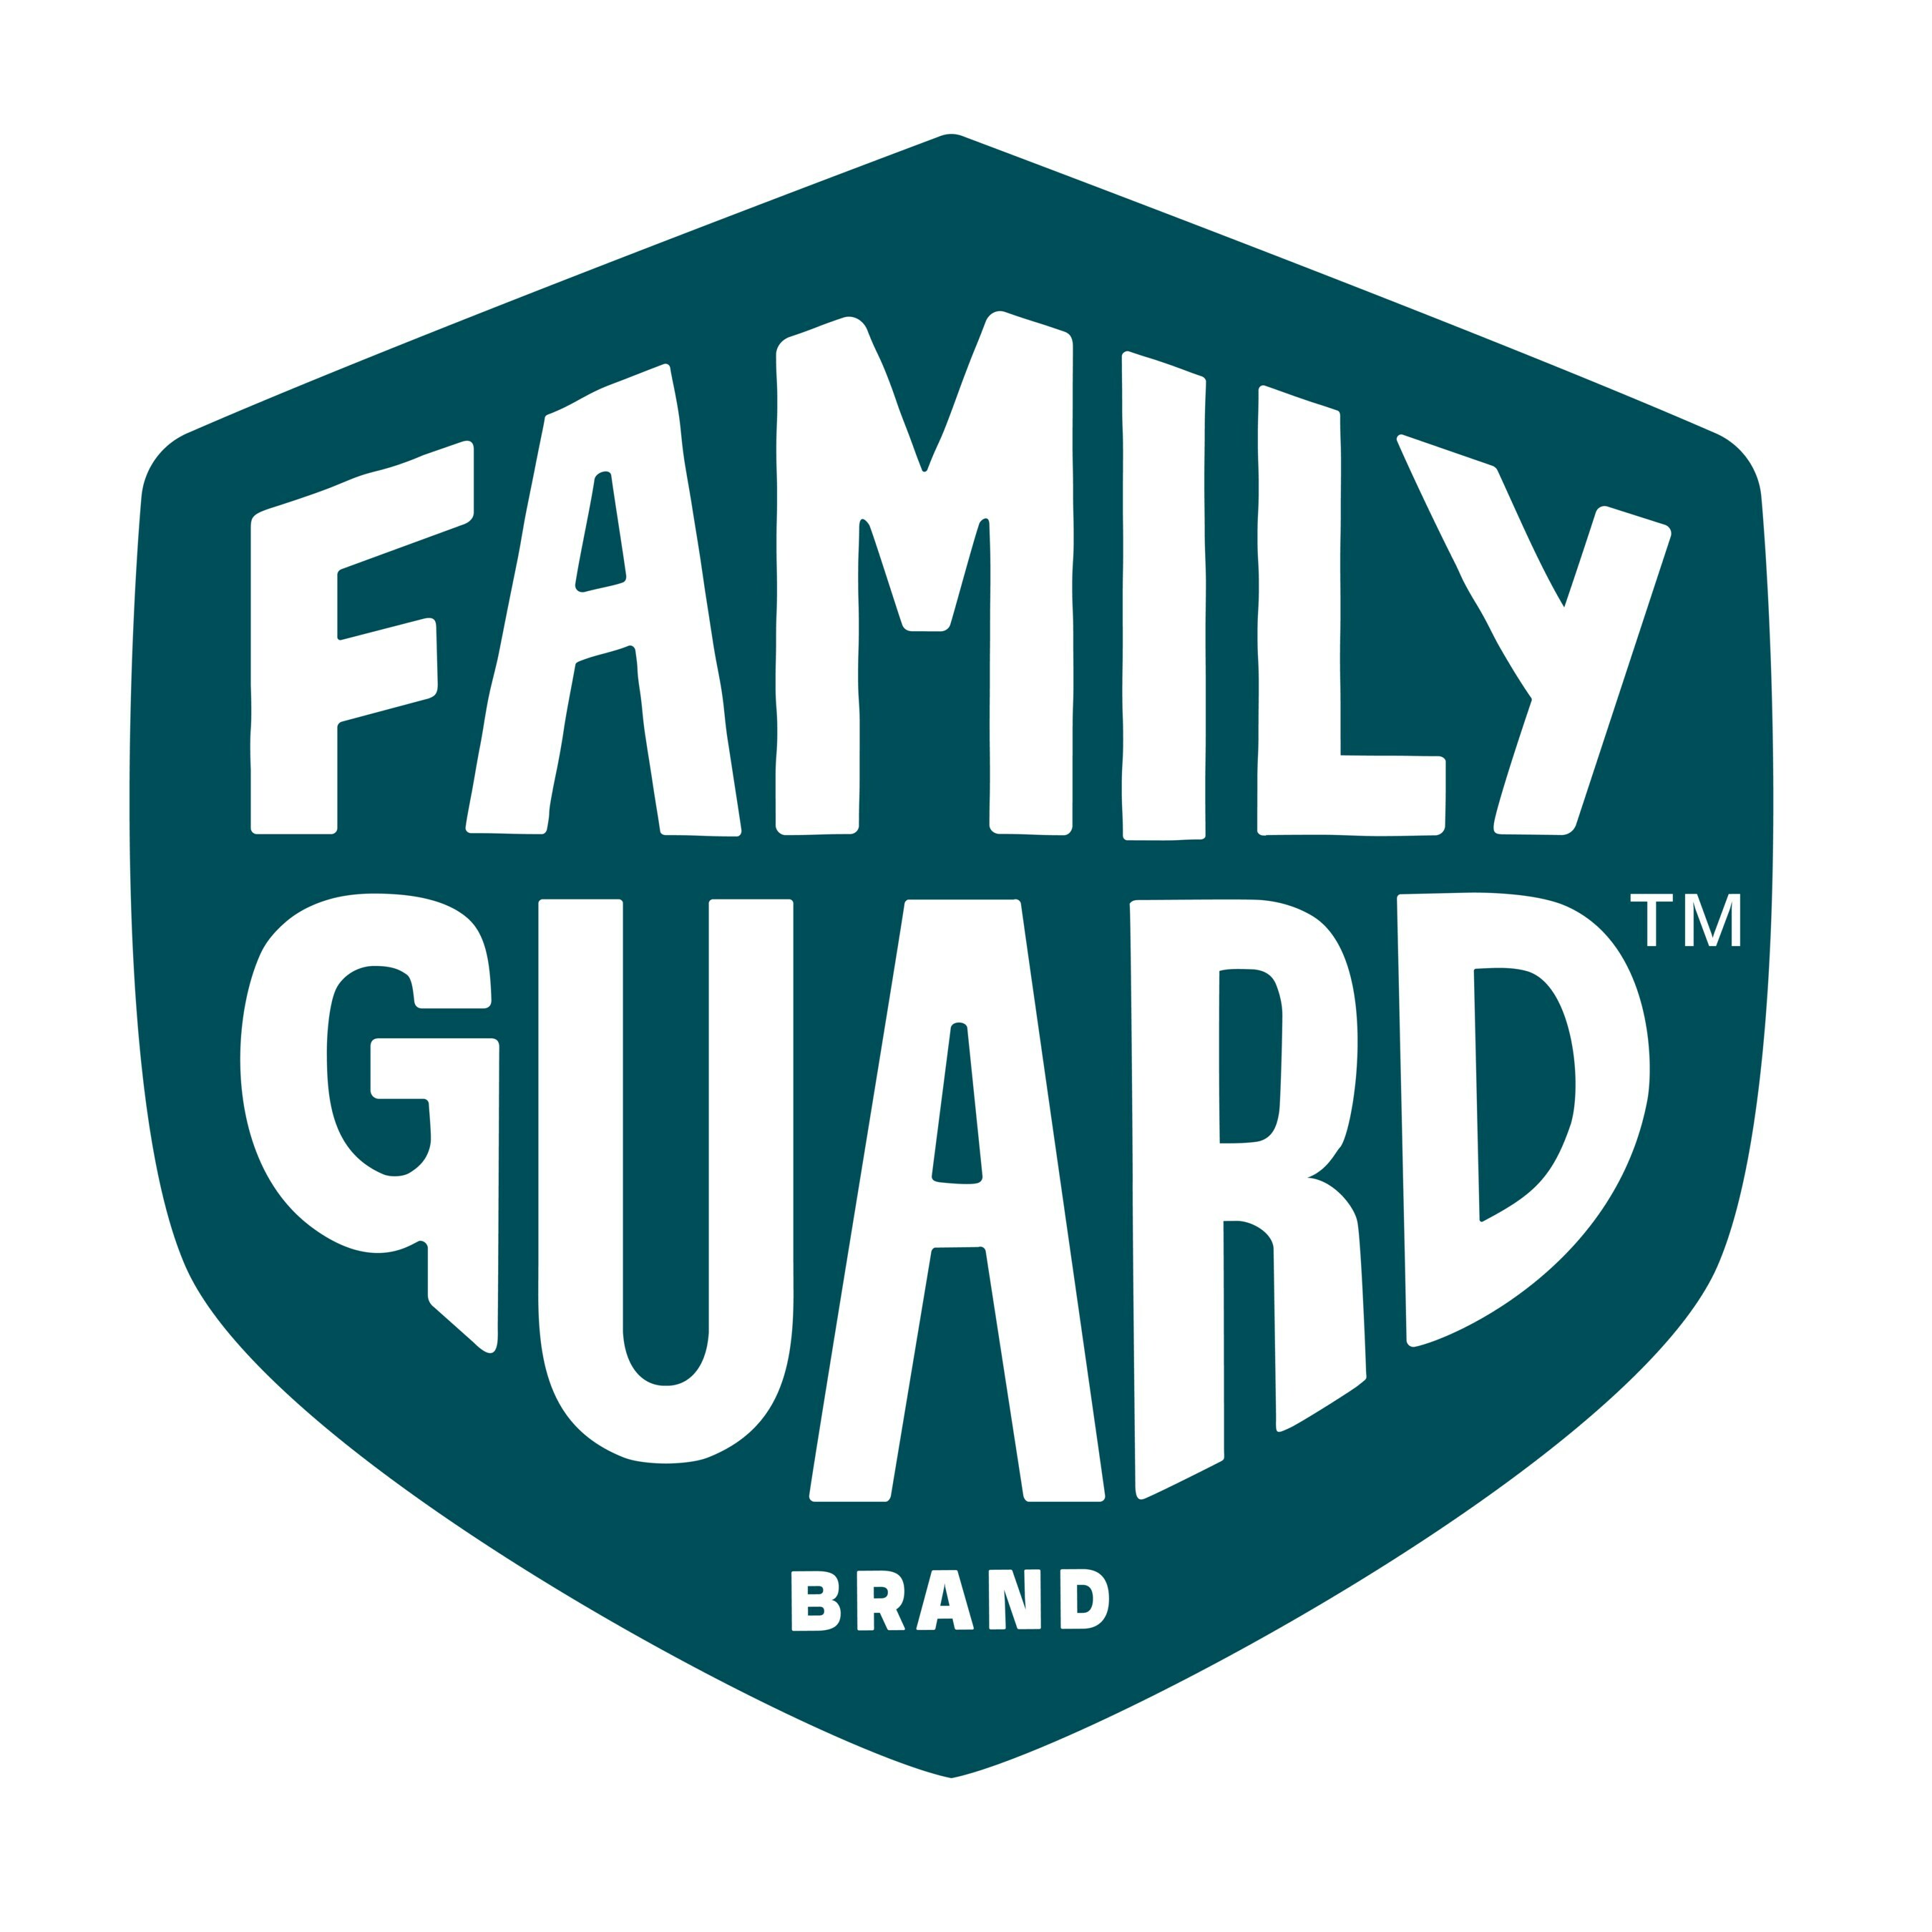 (PRNewsfoto/FamilyGuard™ Brand)